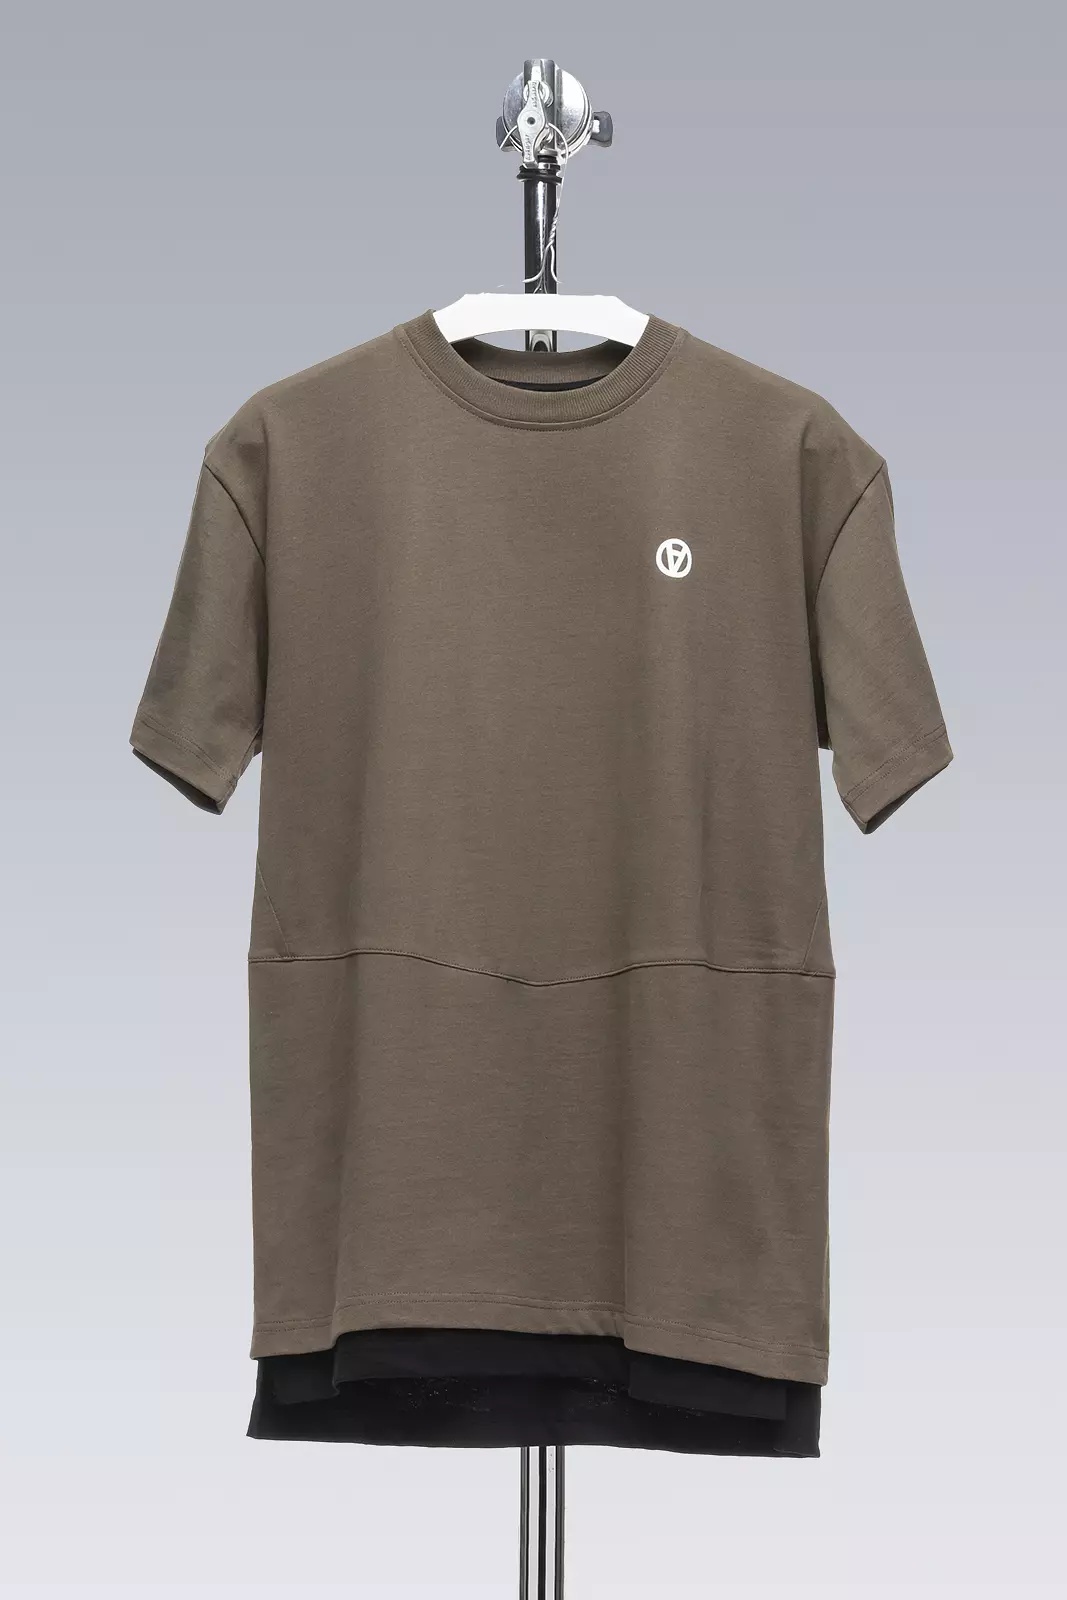 S28-PR-B 100% Organic Cotton Short Sleeve T-shirt RAF Green/Black - 1